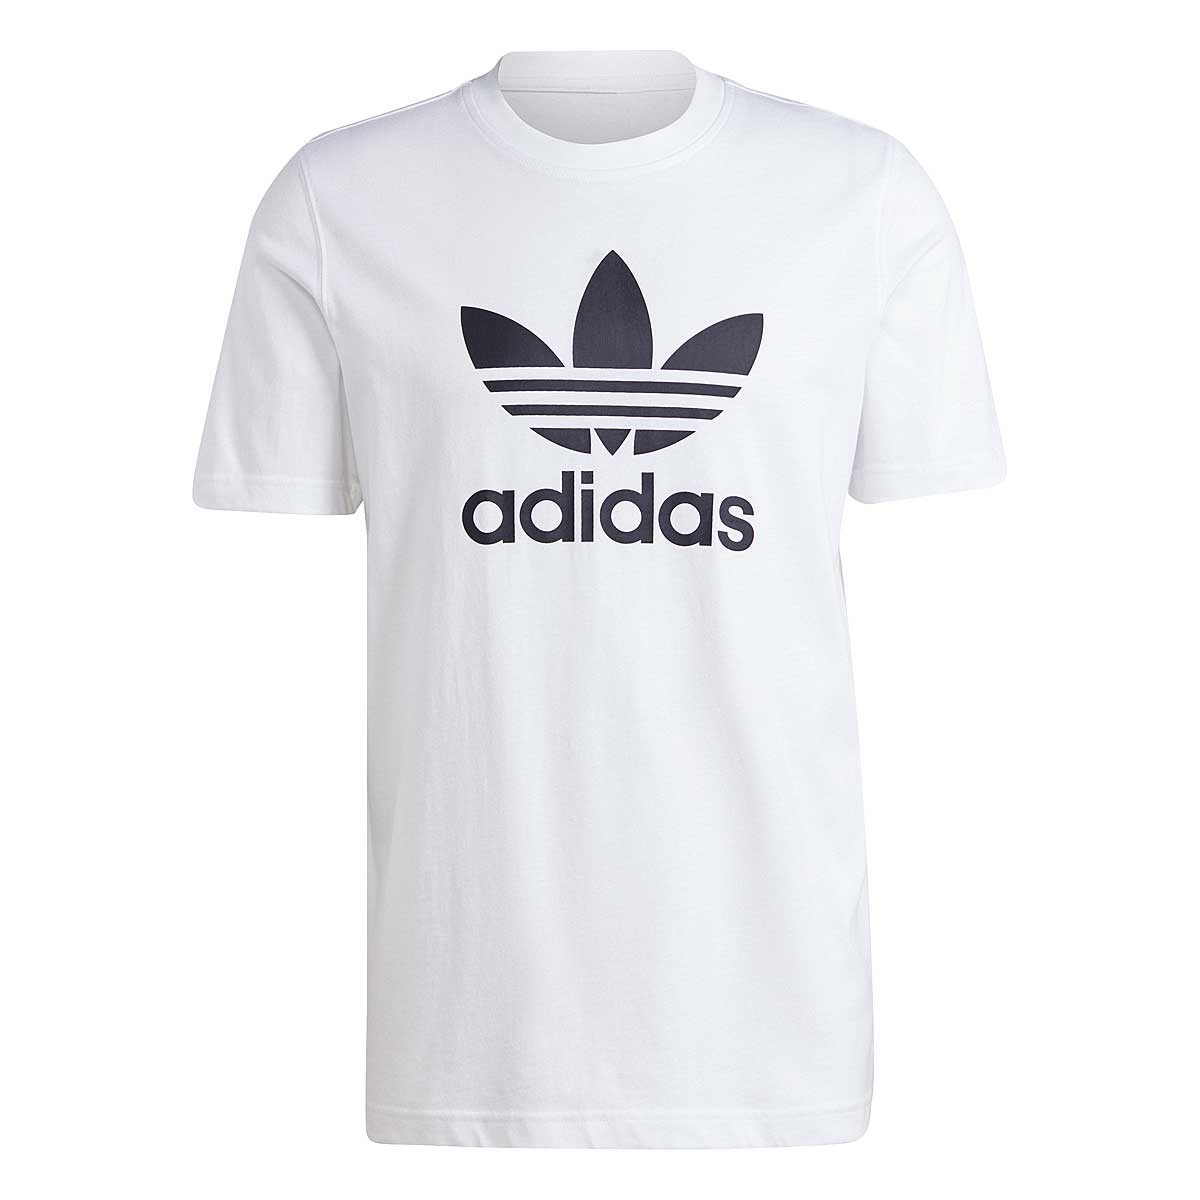 Adidas Trefoil T-shirt, Weiß/schwarz S